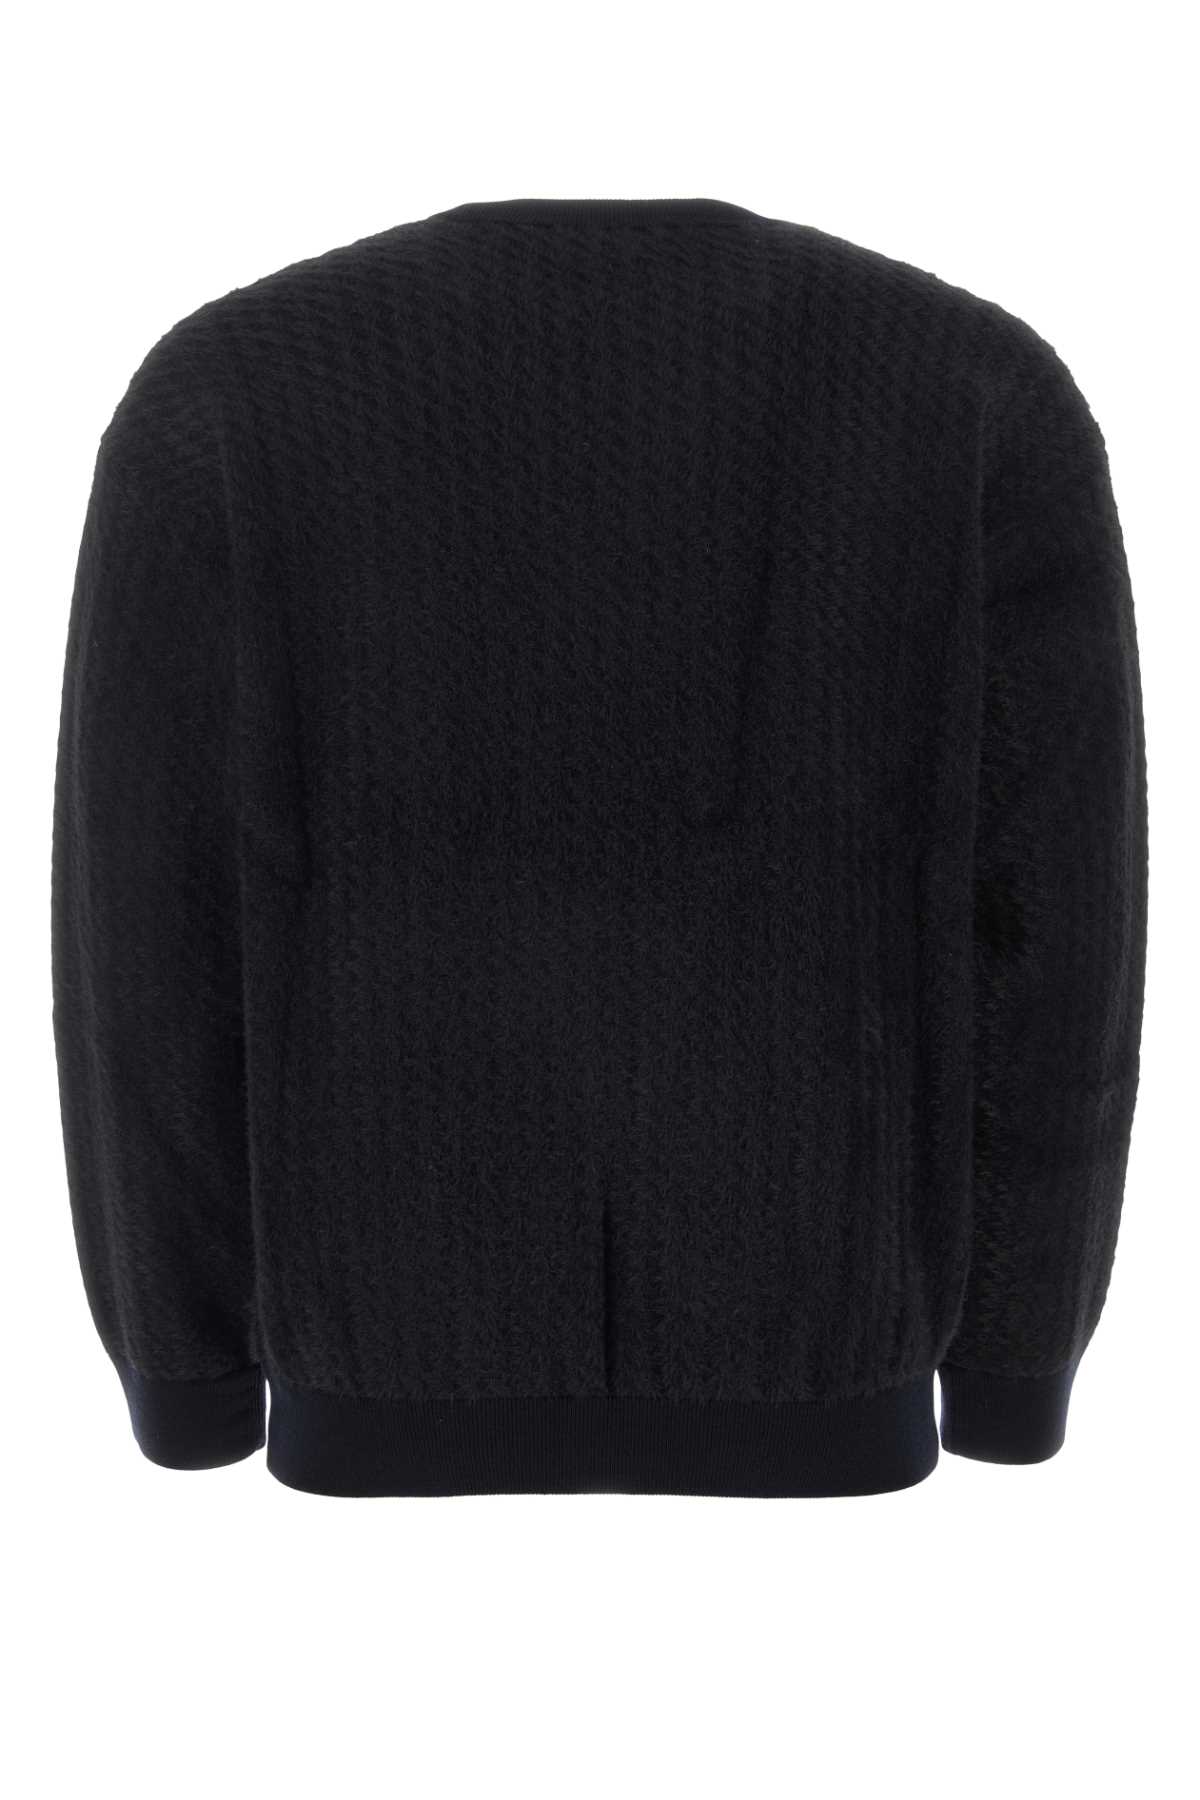 Shop Giorgio Armani Black Wool Blend Sweater